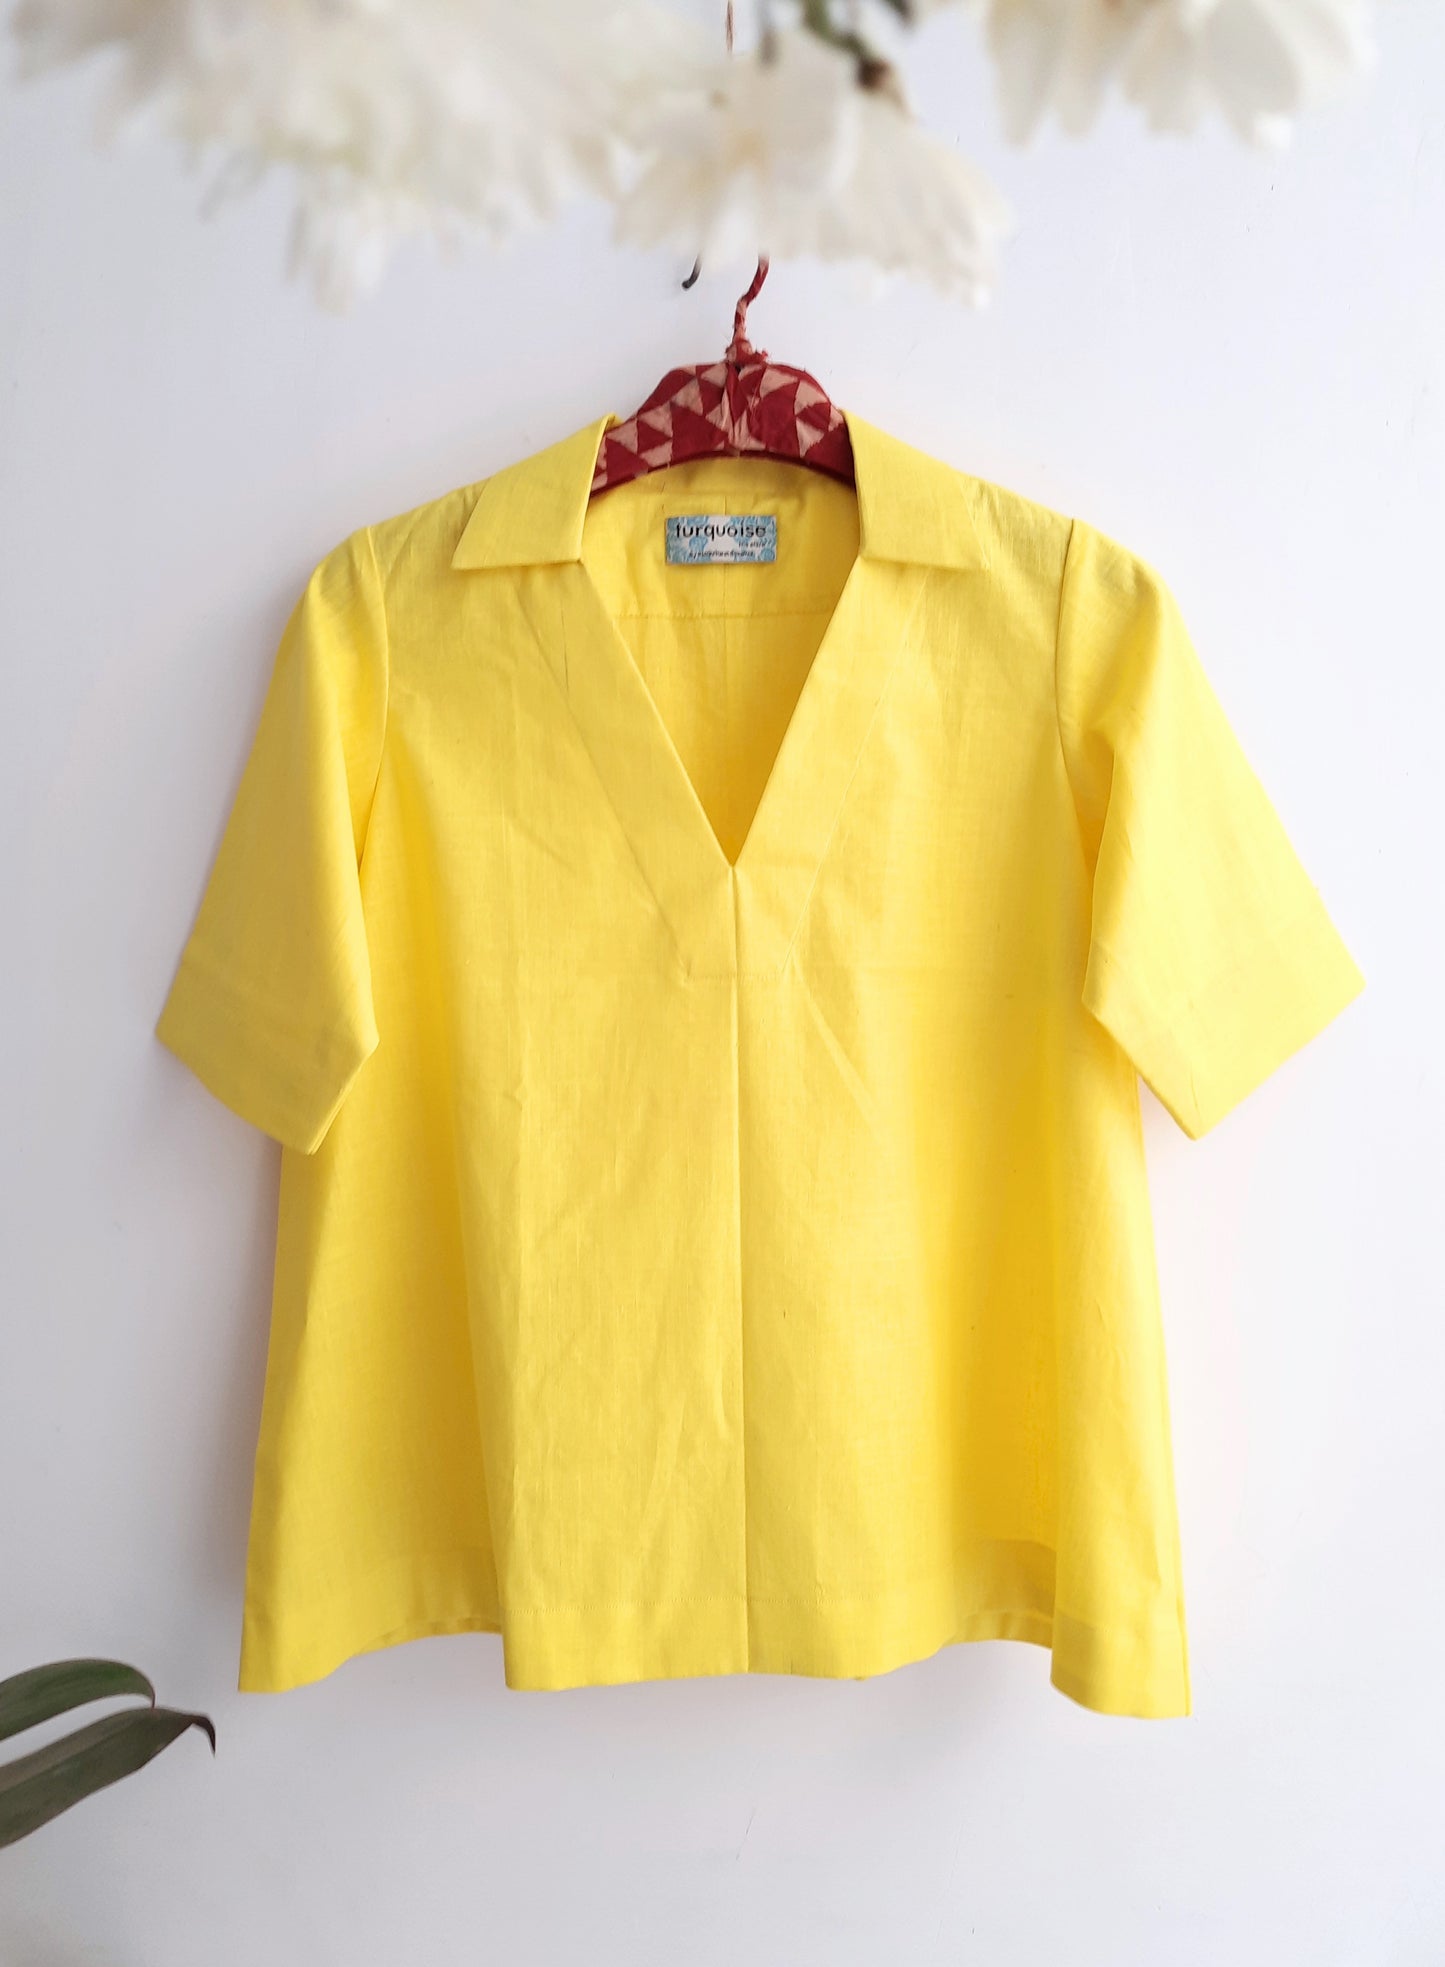 Lemon yellow hand spun organic cotton top, Handwoven top, Lemon yellow top, Sustainable fashion